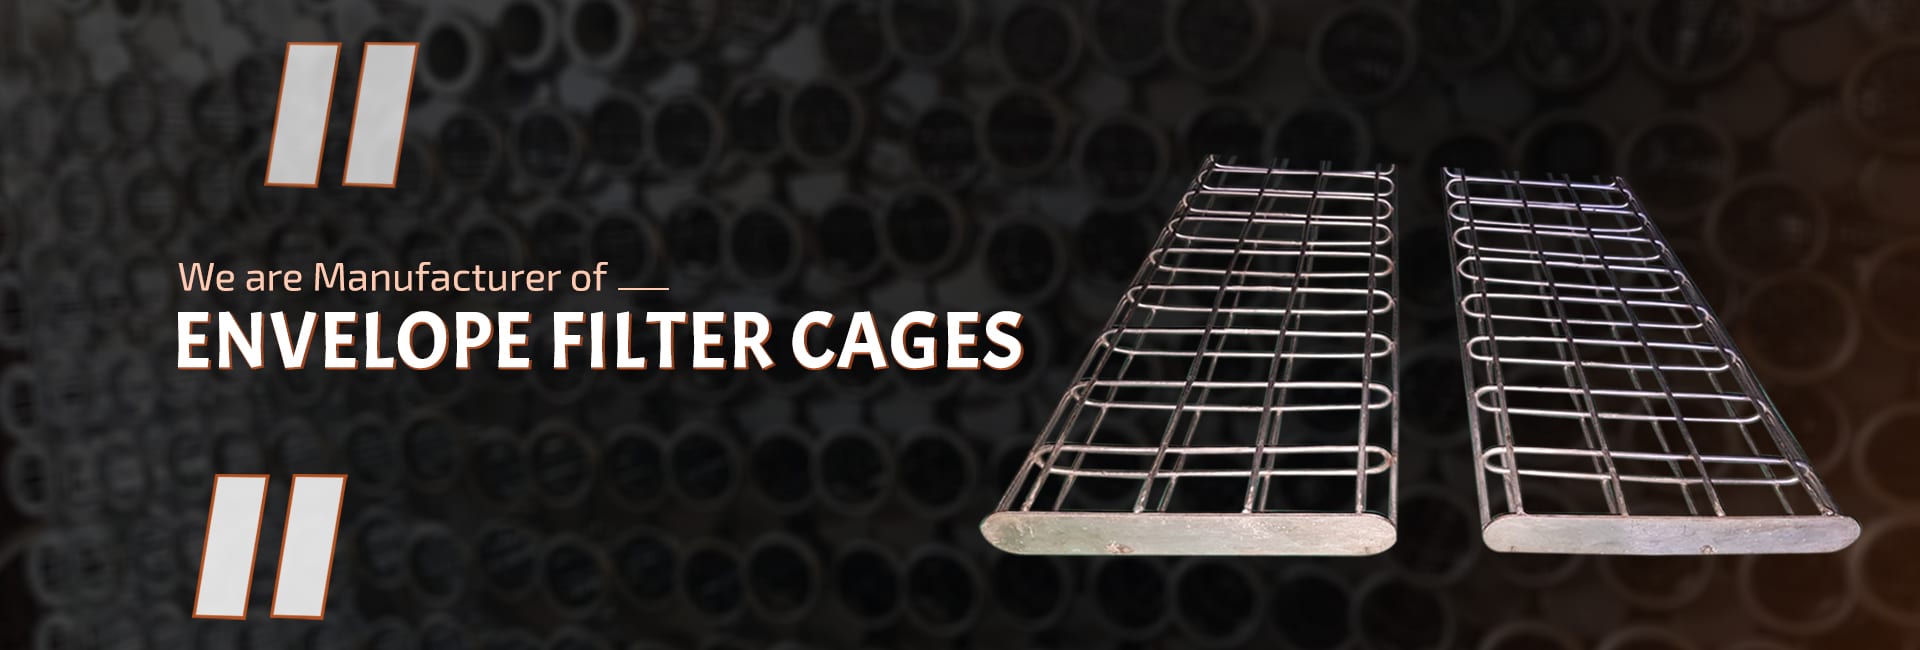 envelope filter cage manufacturer in Ahmedabad, india